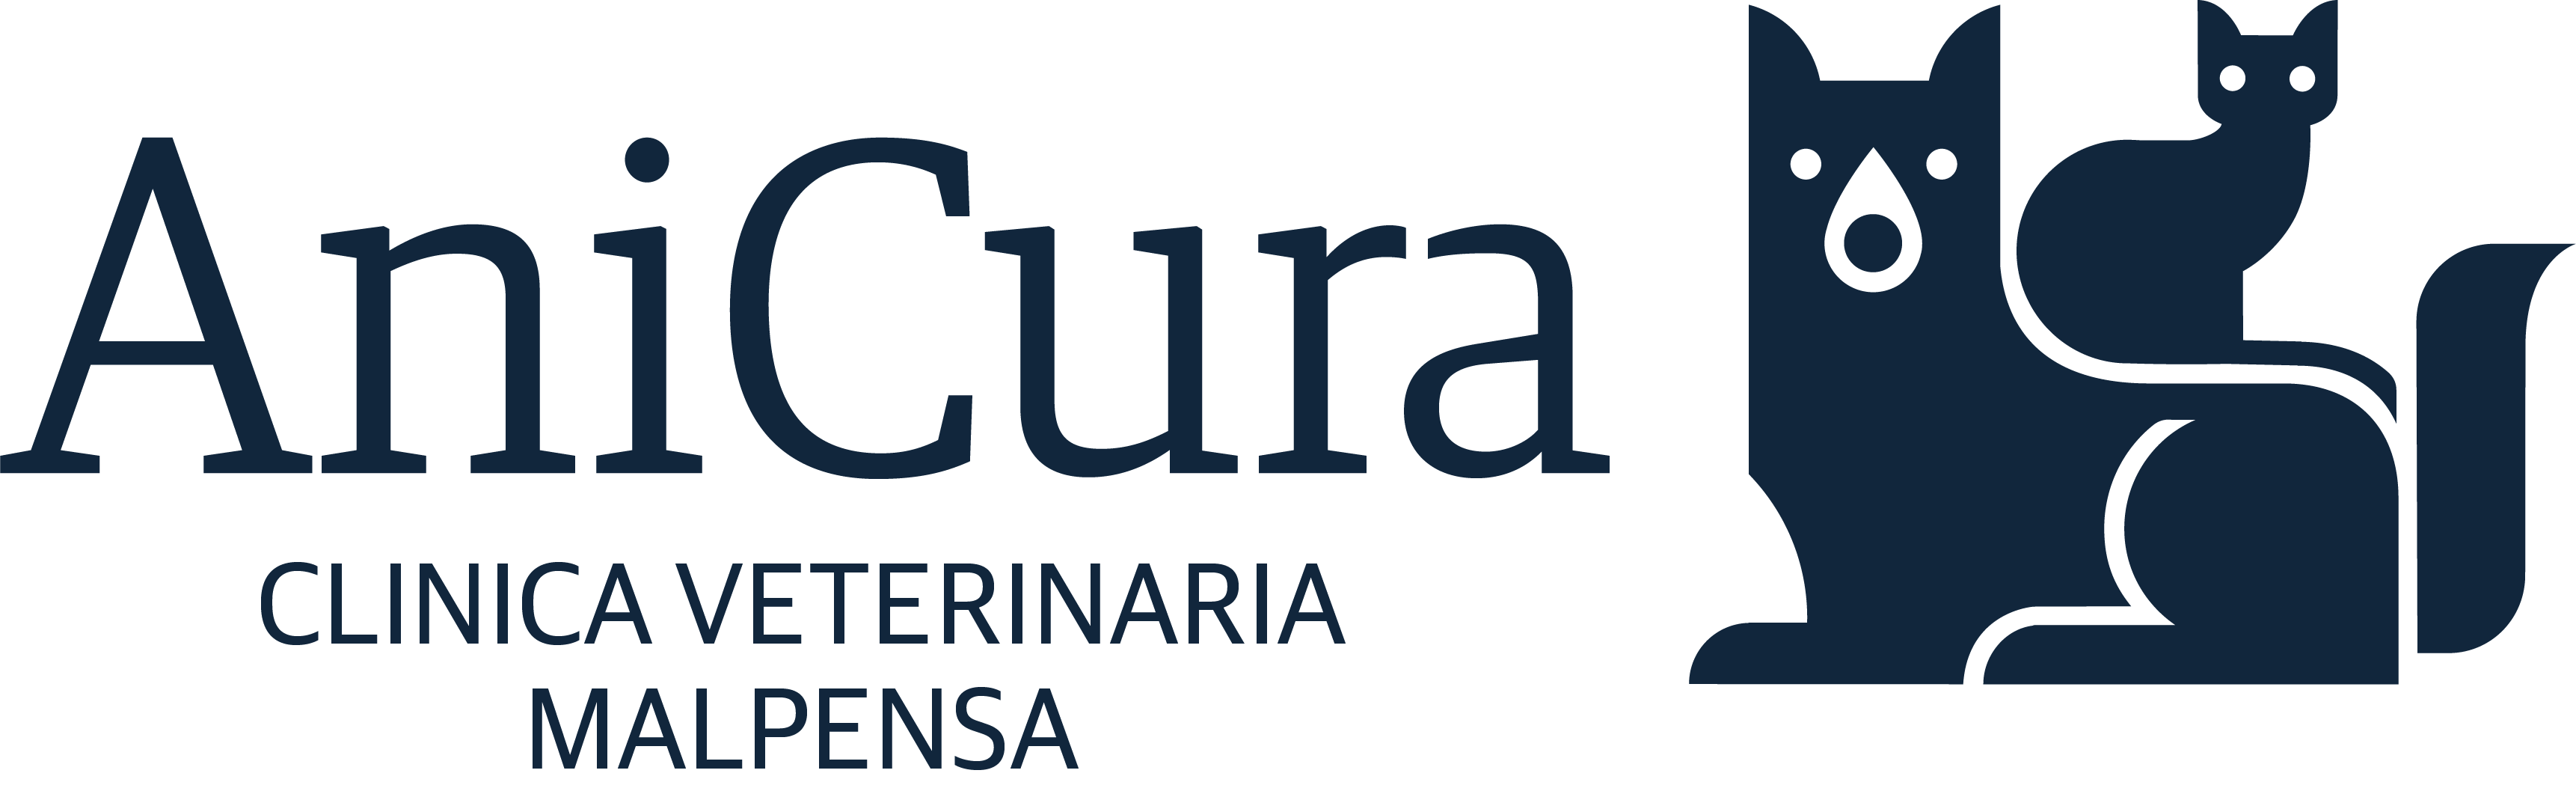 Clinica Veterinaria Malpensa logo